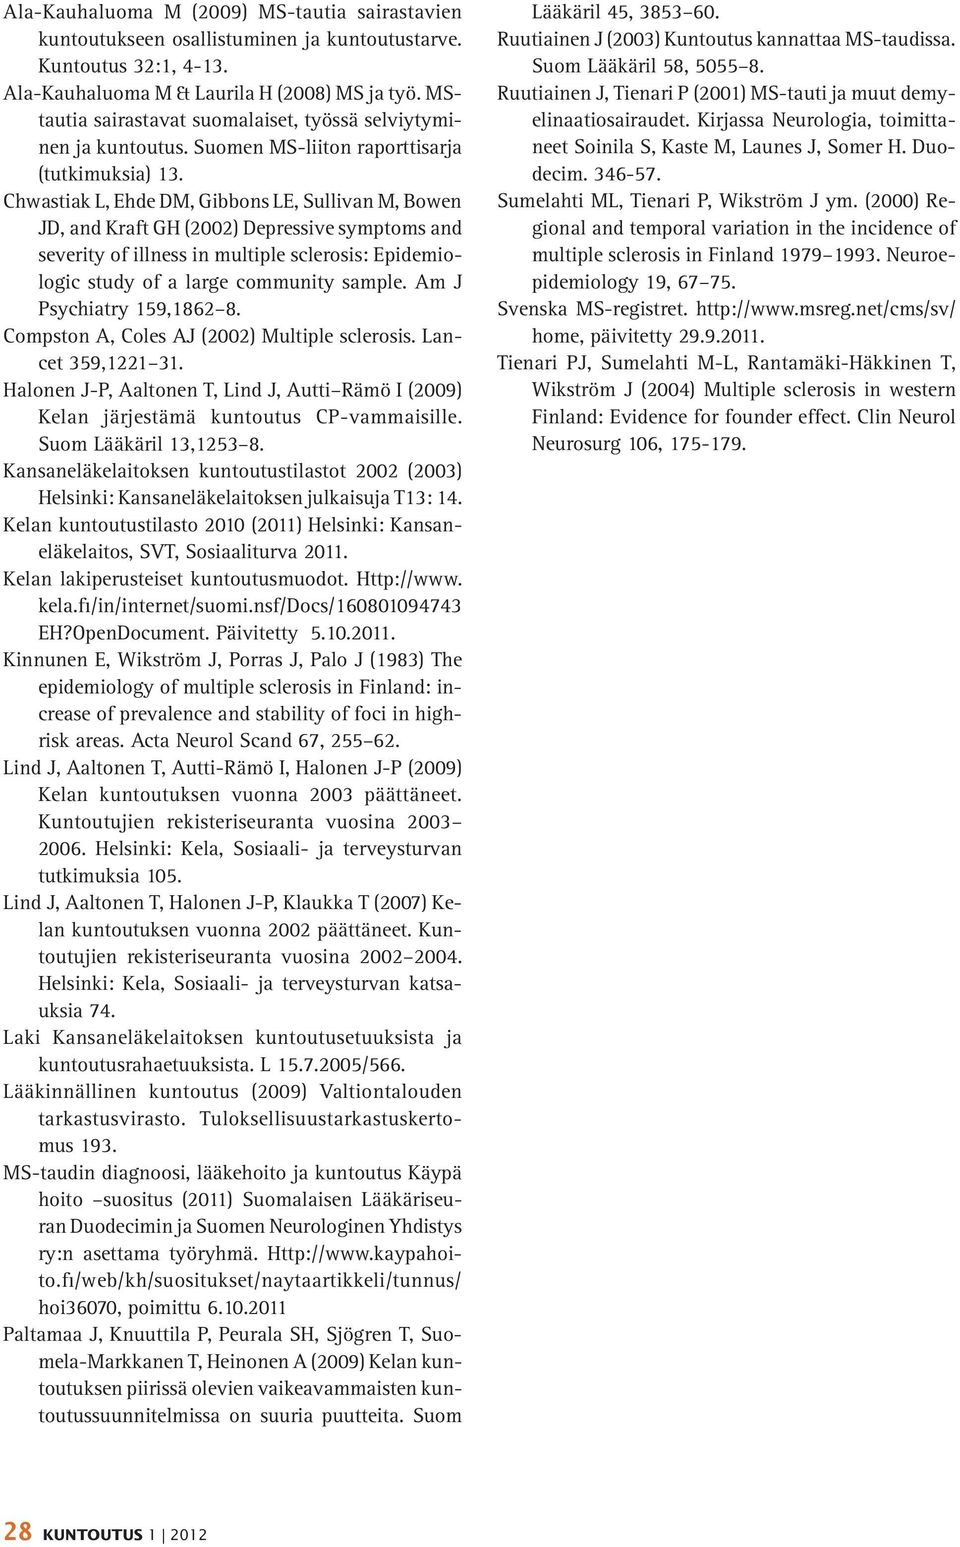 Chwastiak L, Ehde DM, Gibbons LE, Sullivan M, Bowen JD, and Kraft GH (2002) Depressive symptoms and severity of illness in multiple sclerosis: Epidemiologic study of a large community sample.